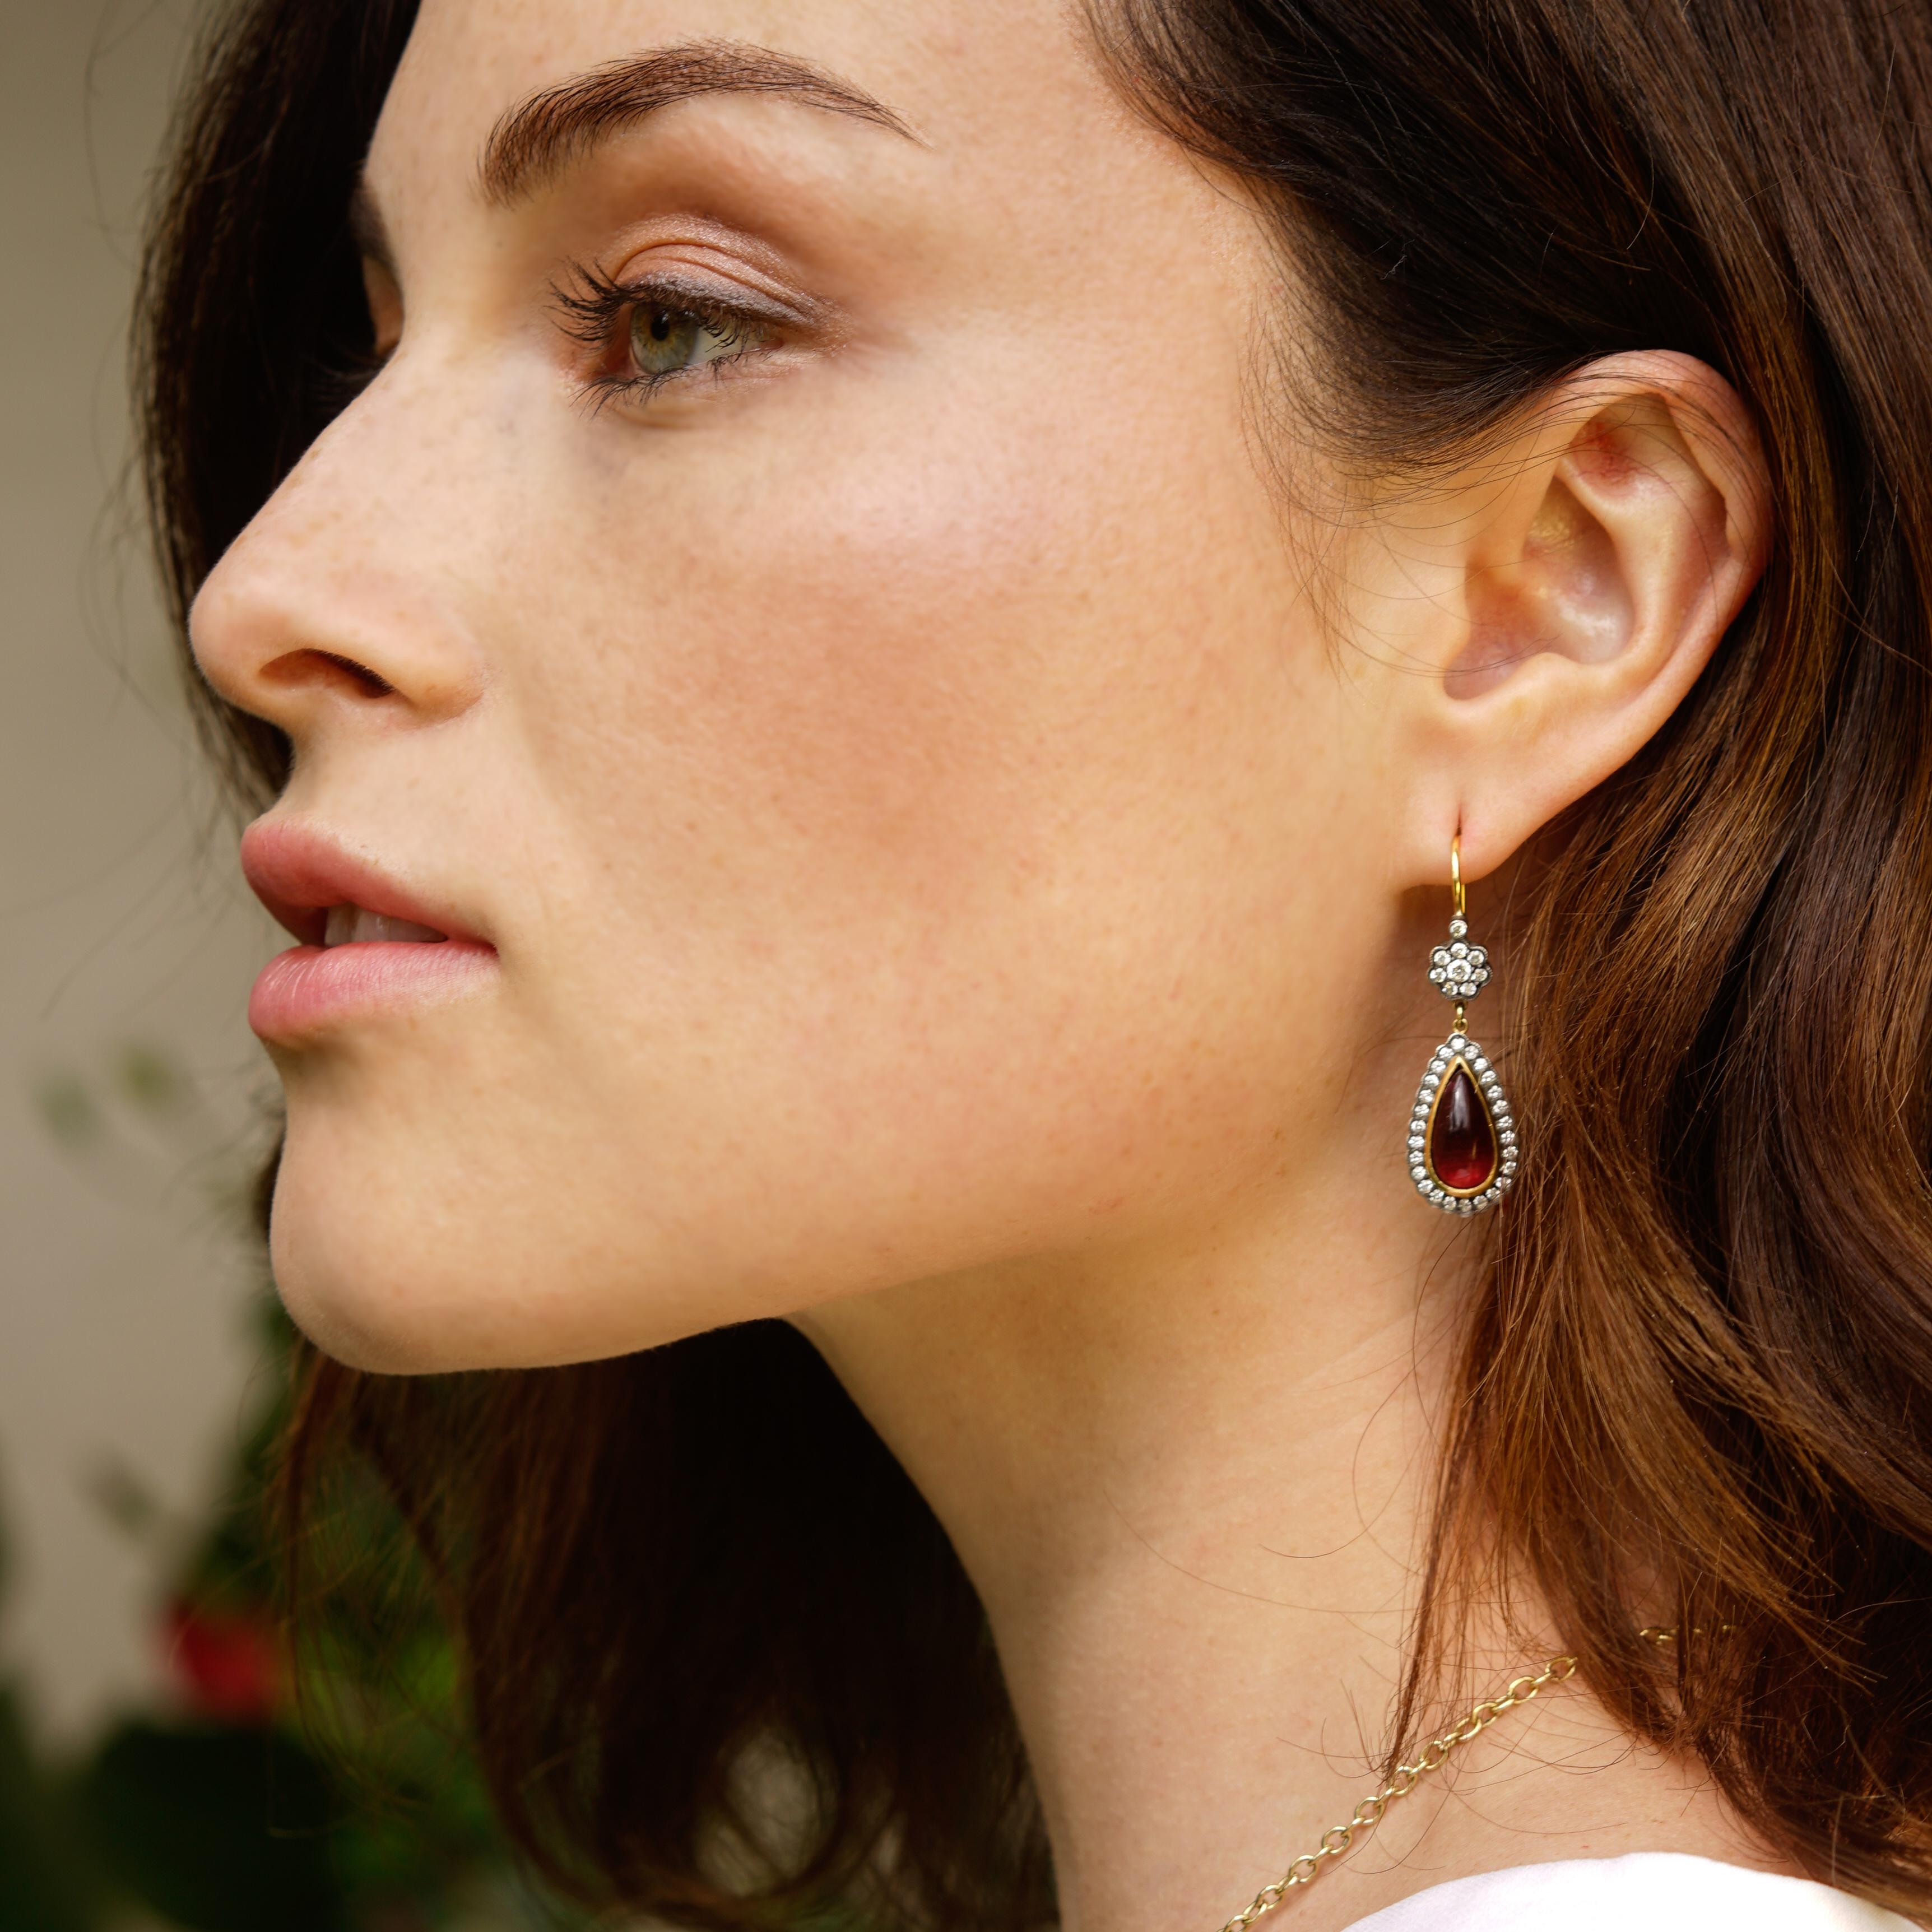 gumby earrings